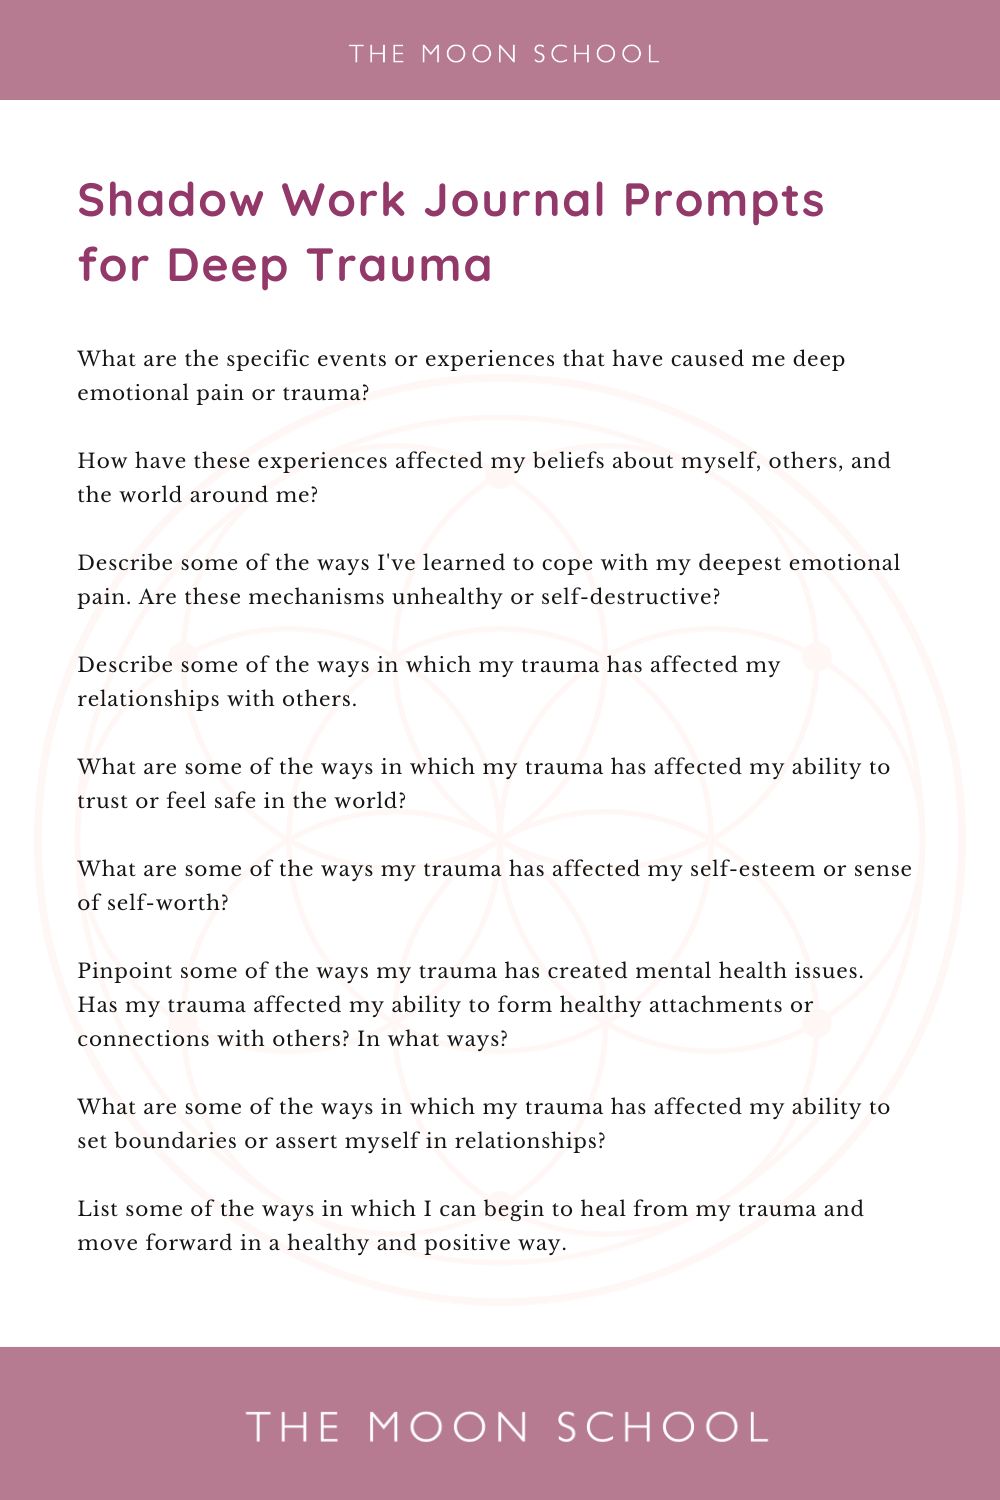 List of journal prompts for healing deep trauma